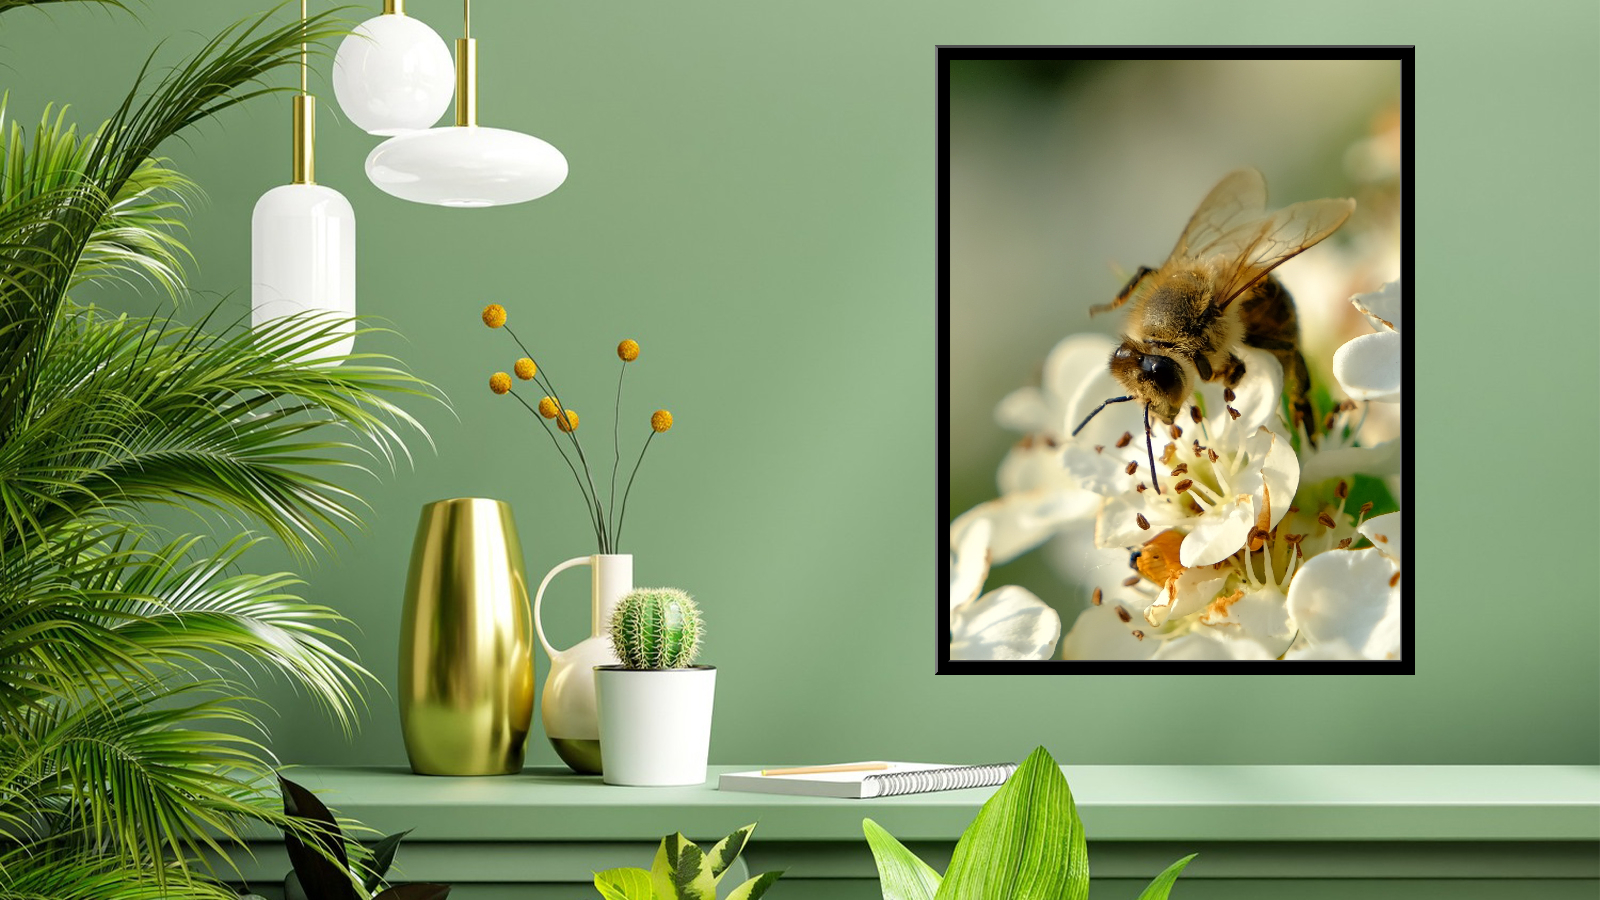 Bee collecting pollen - 2